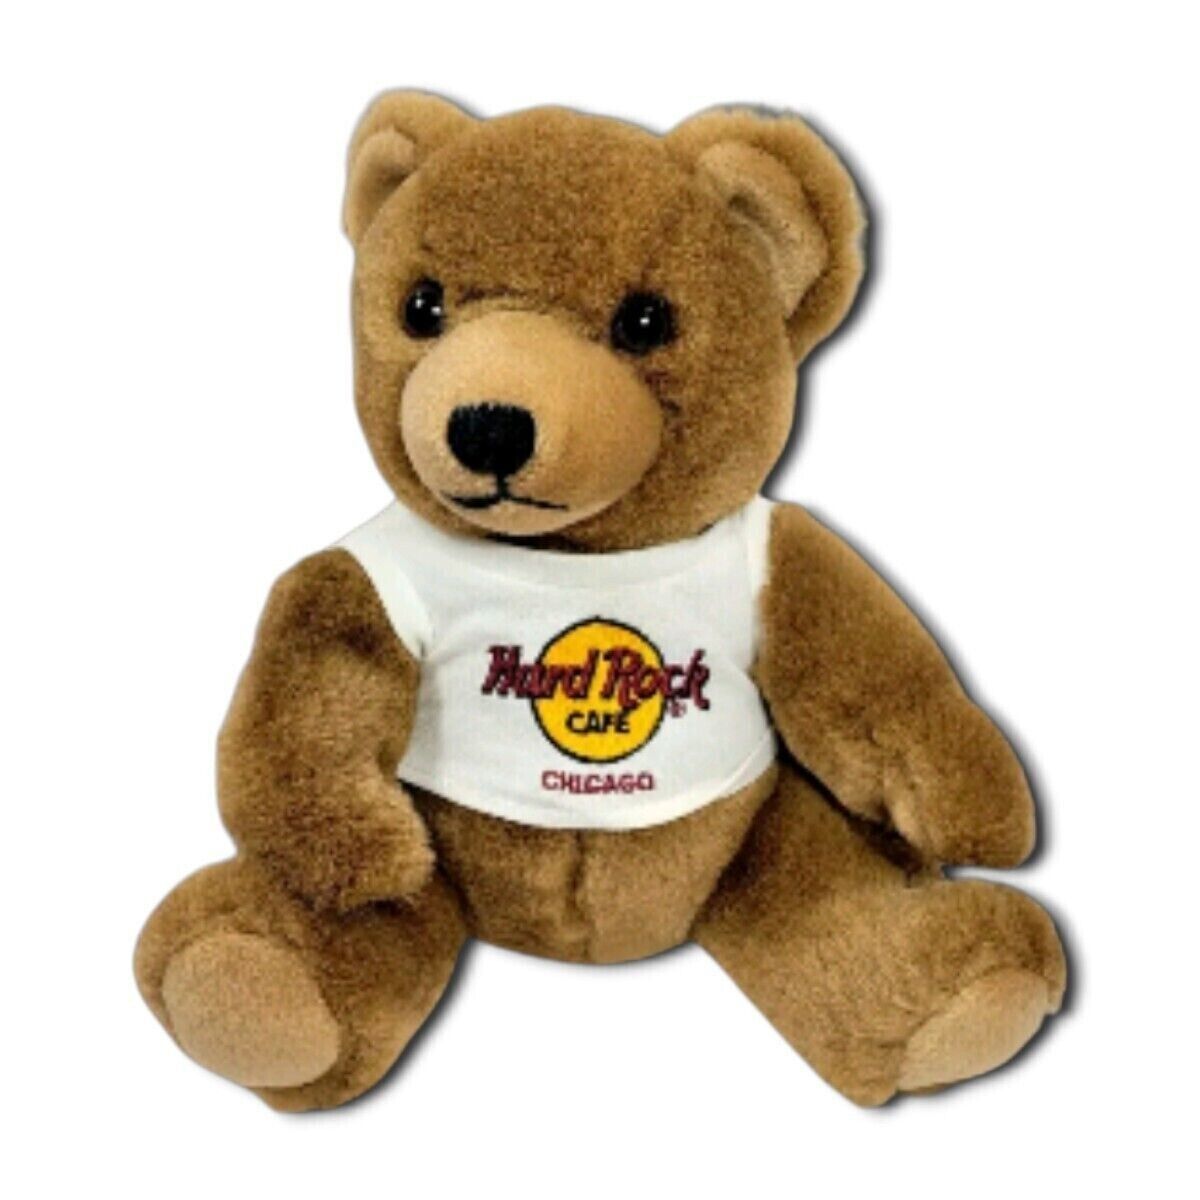 Hard Rock Cafe Chicago Teddy Bear 9 Inch Herrington Plush T Shirt Vintage 1990